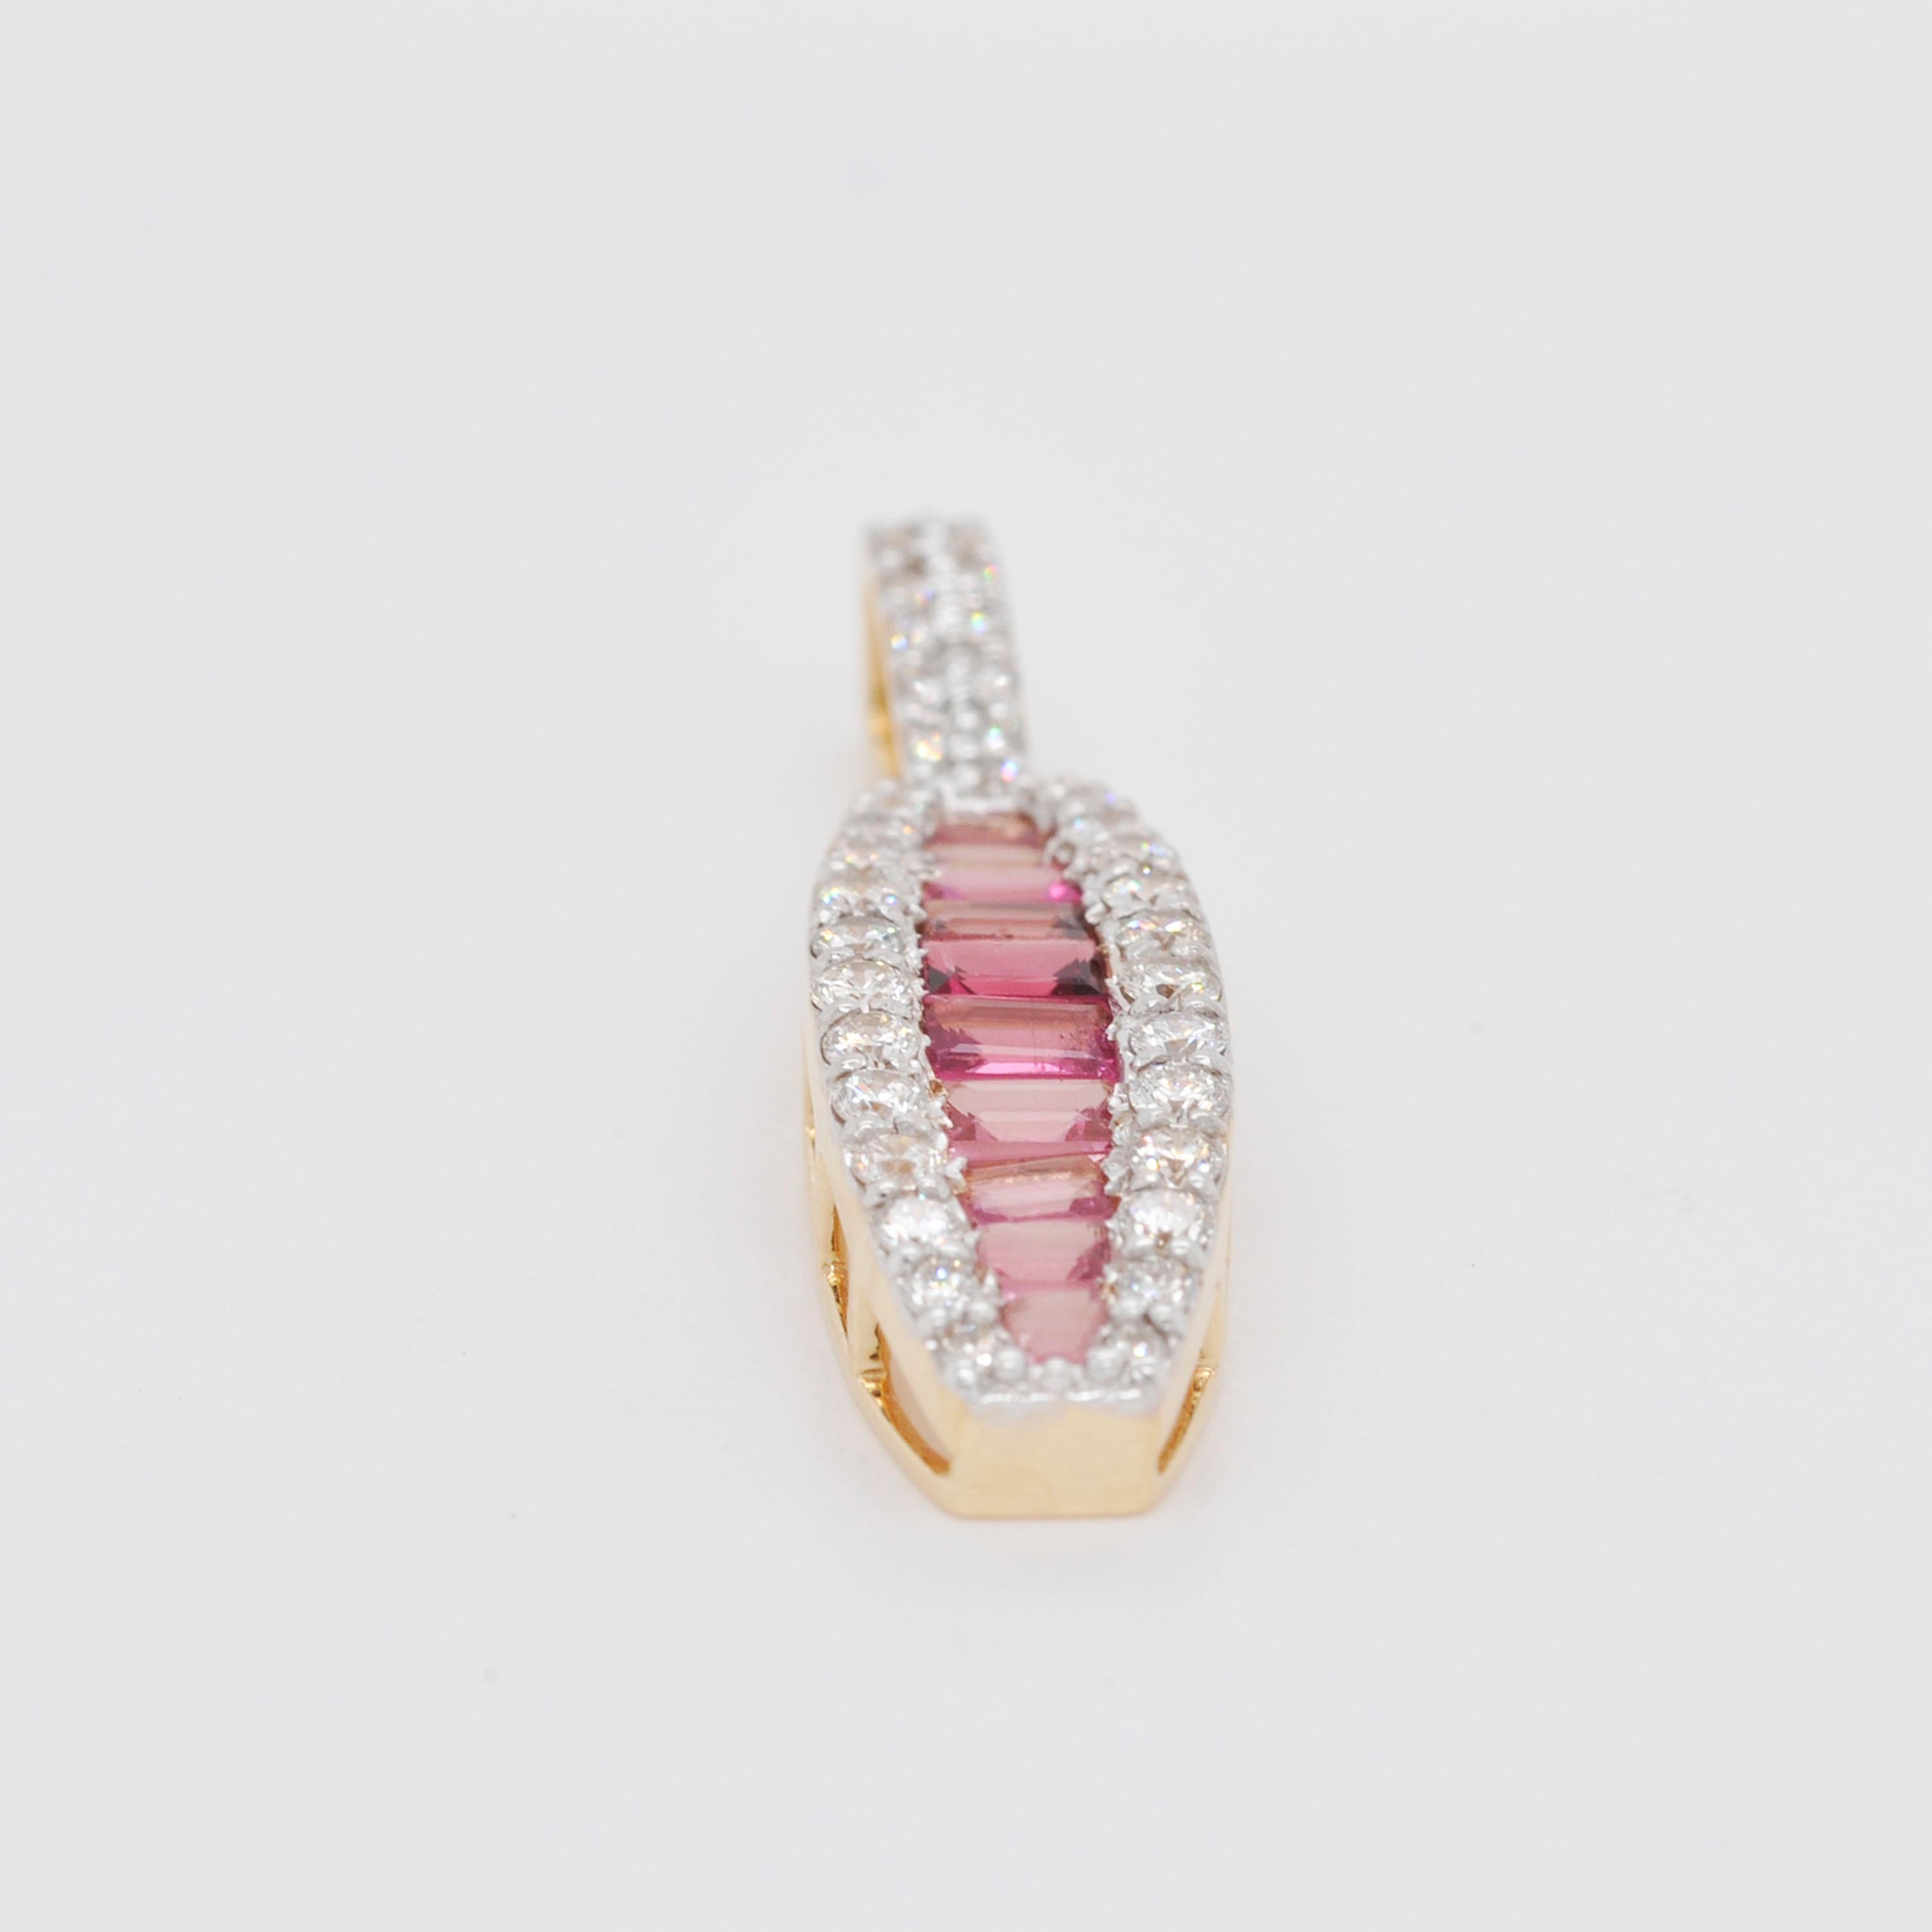 18 Karat Gold Pink Tourmaline Diamond Huggies Pendant Necklace Earrings Ring Set For Sale 2